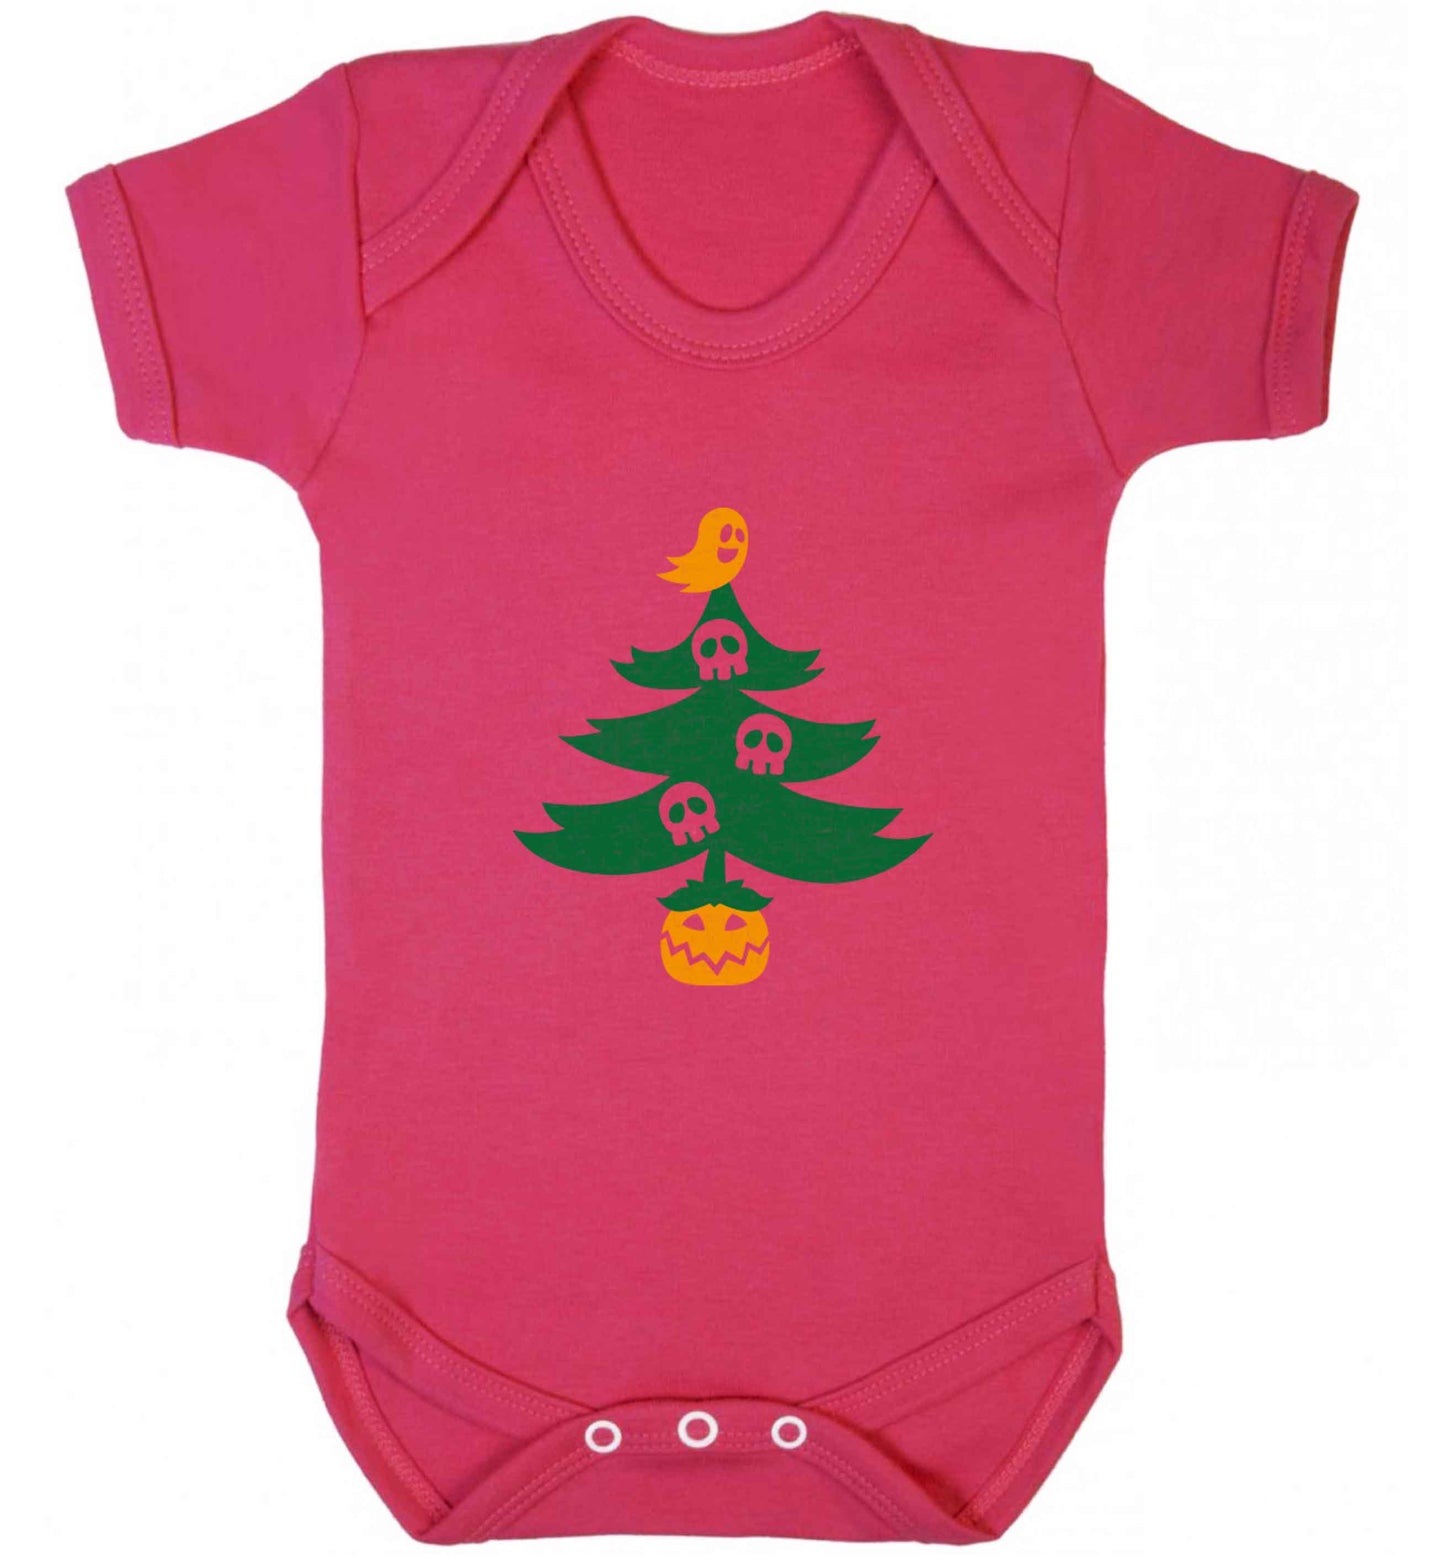 Halloween Christmas tree baby vest dark pink 18-24 months